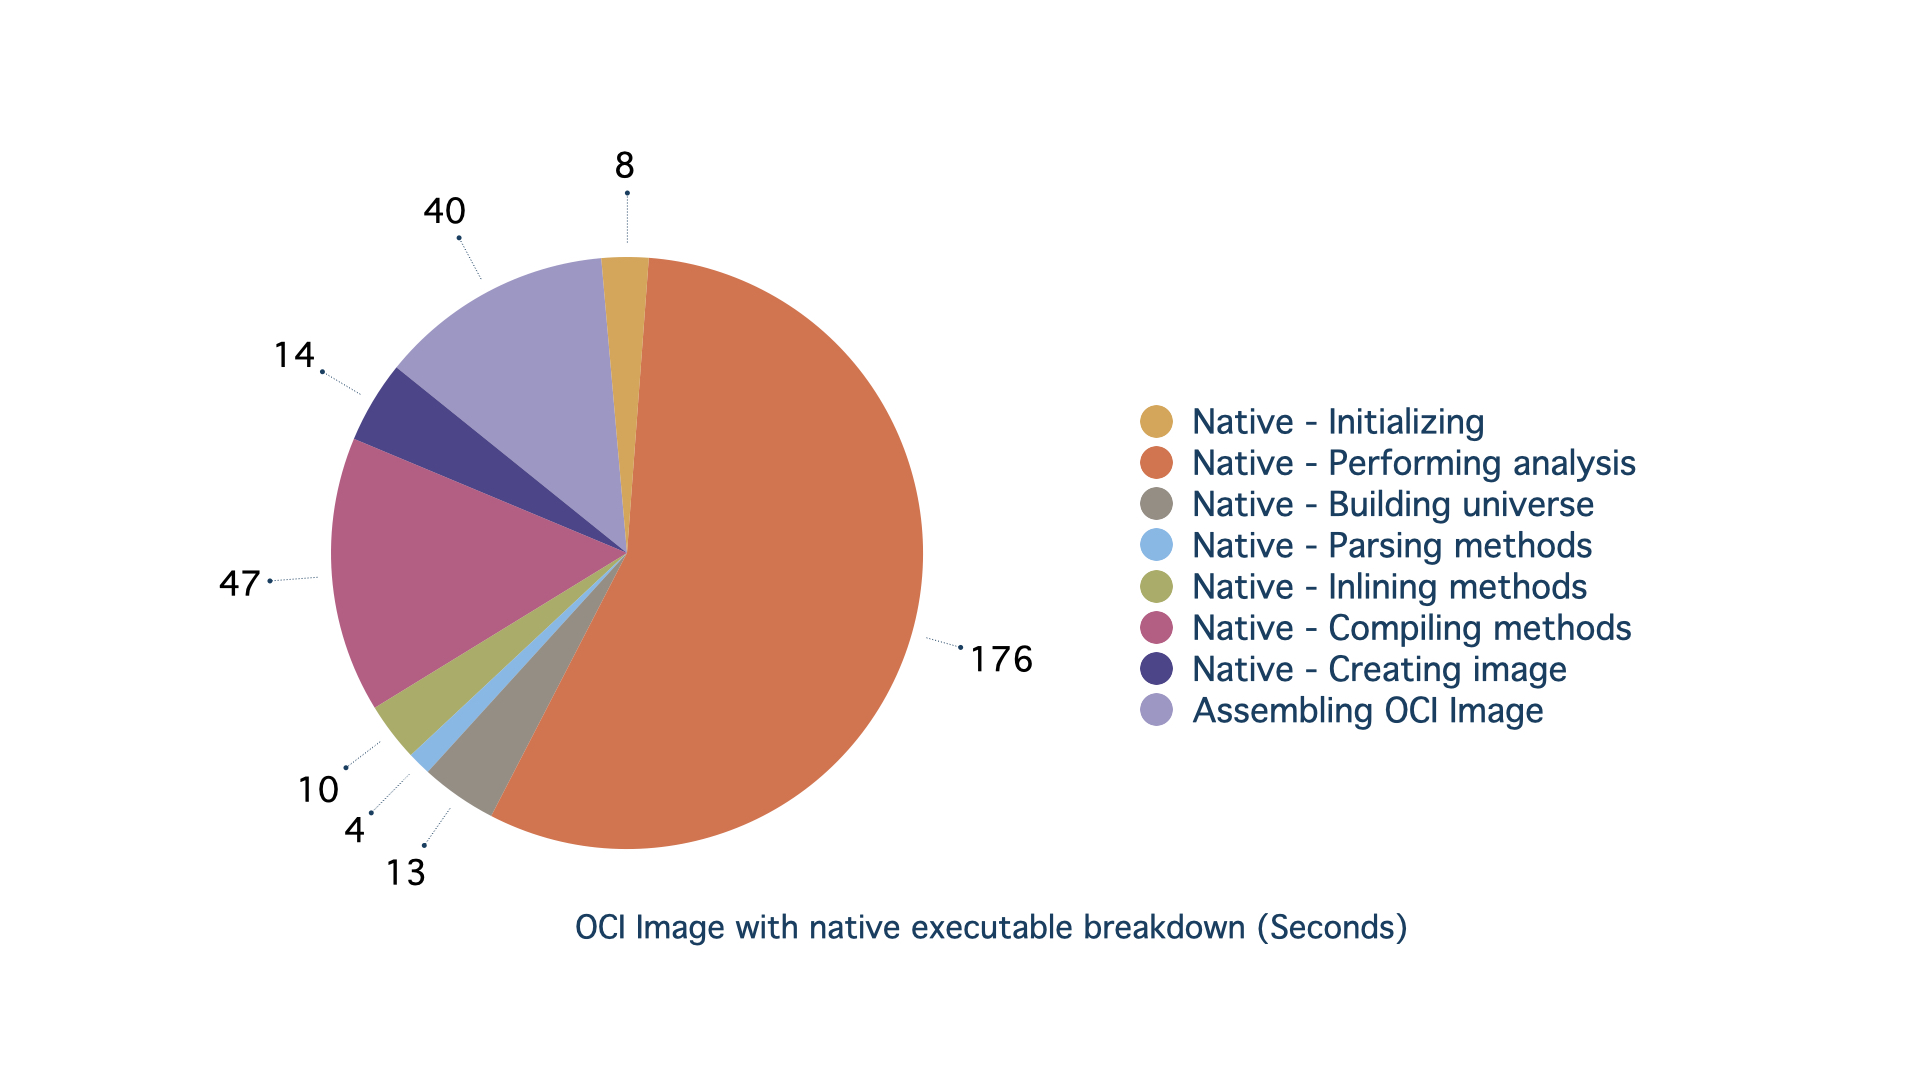 OCI Image with native executable breakdown